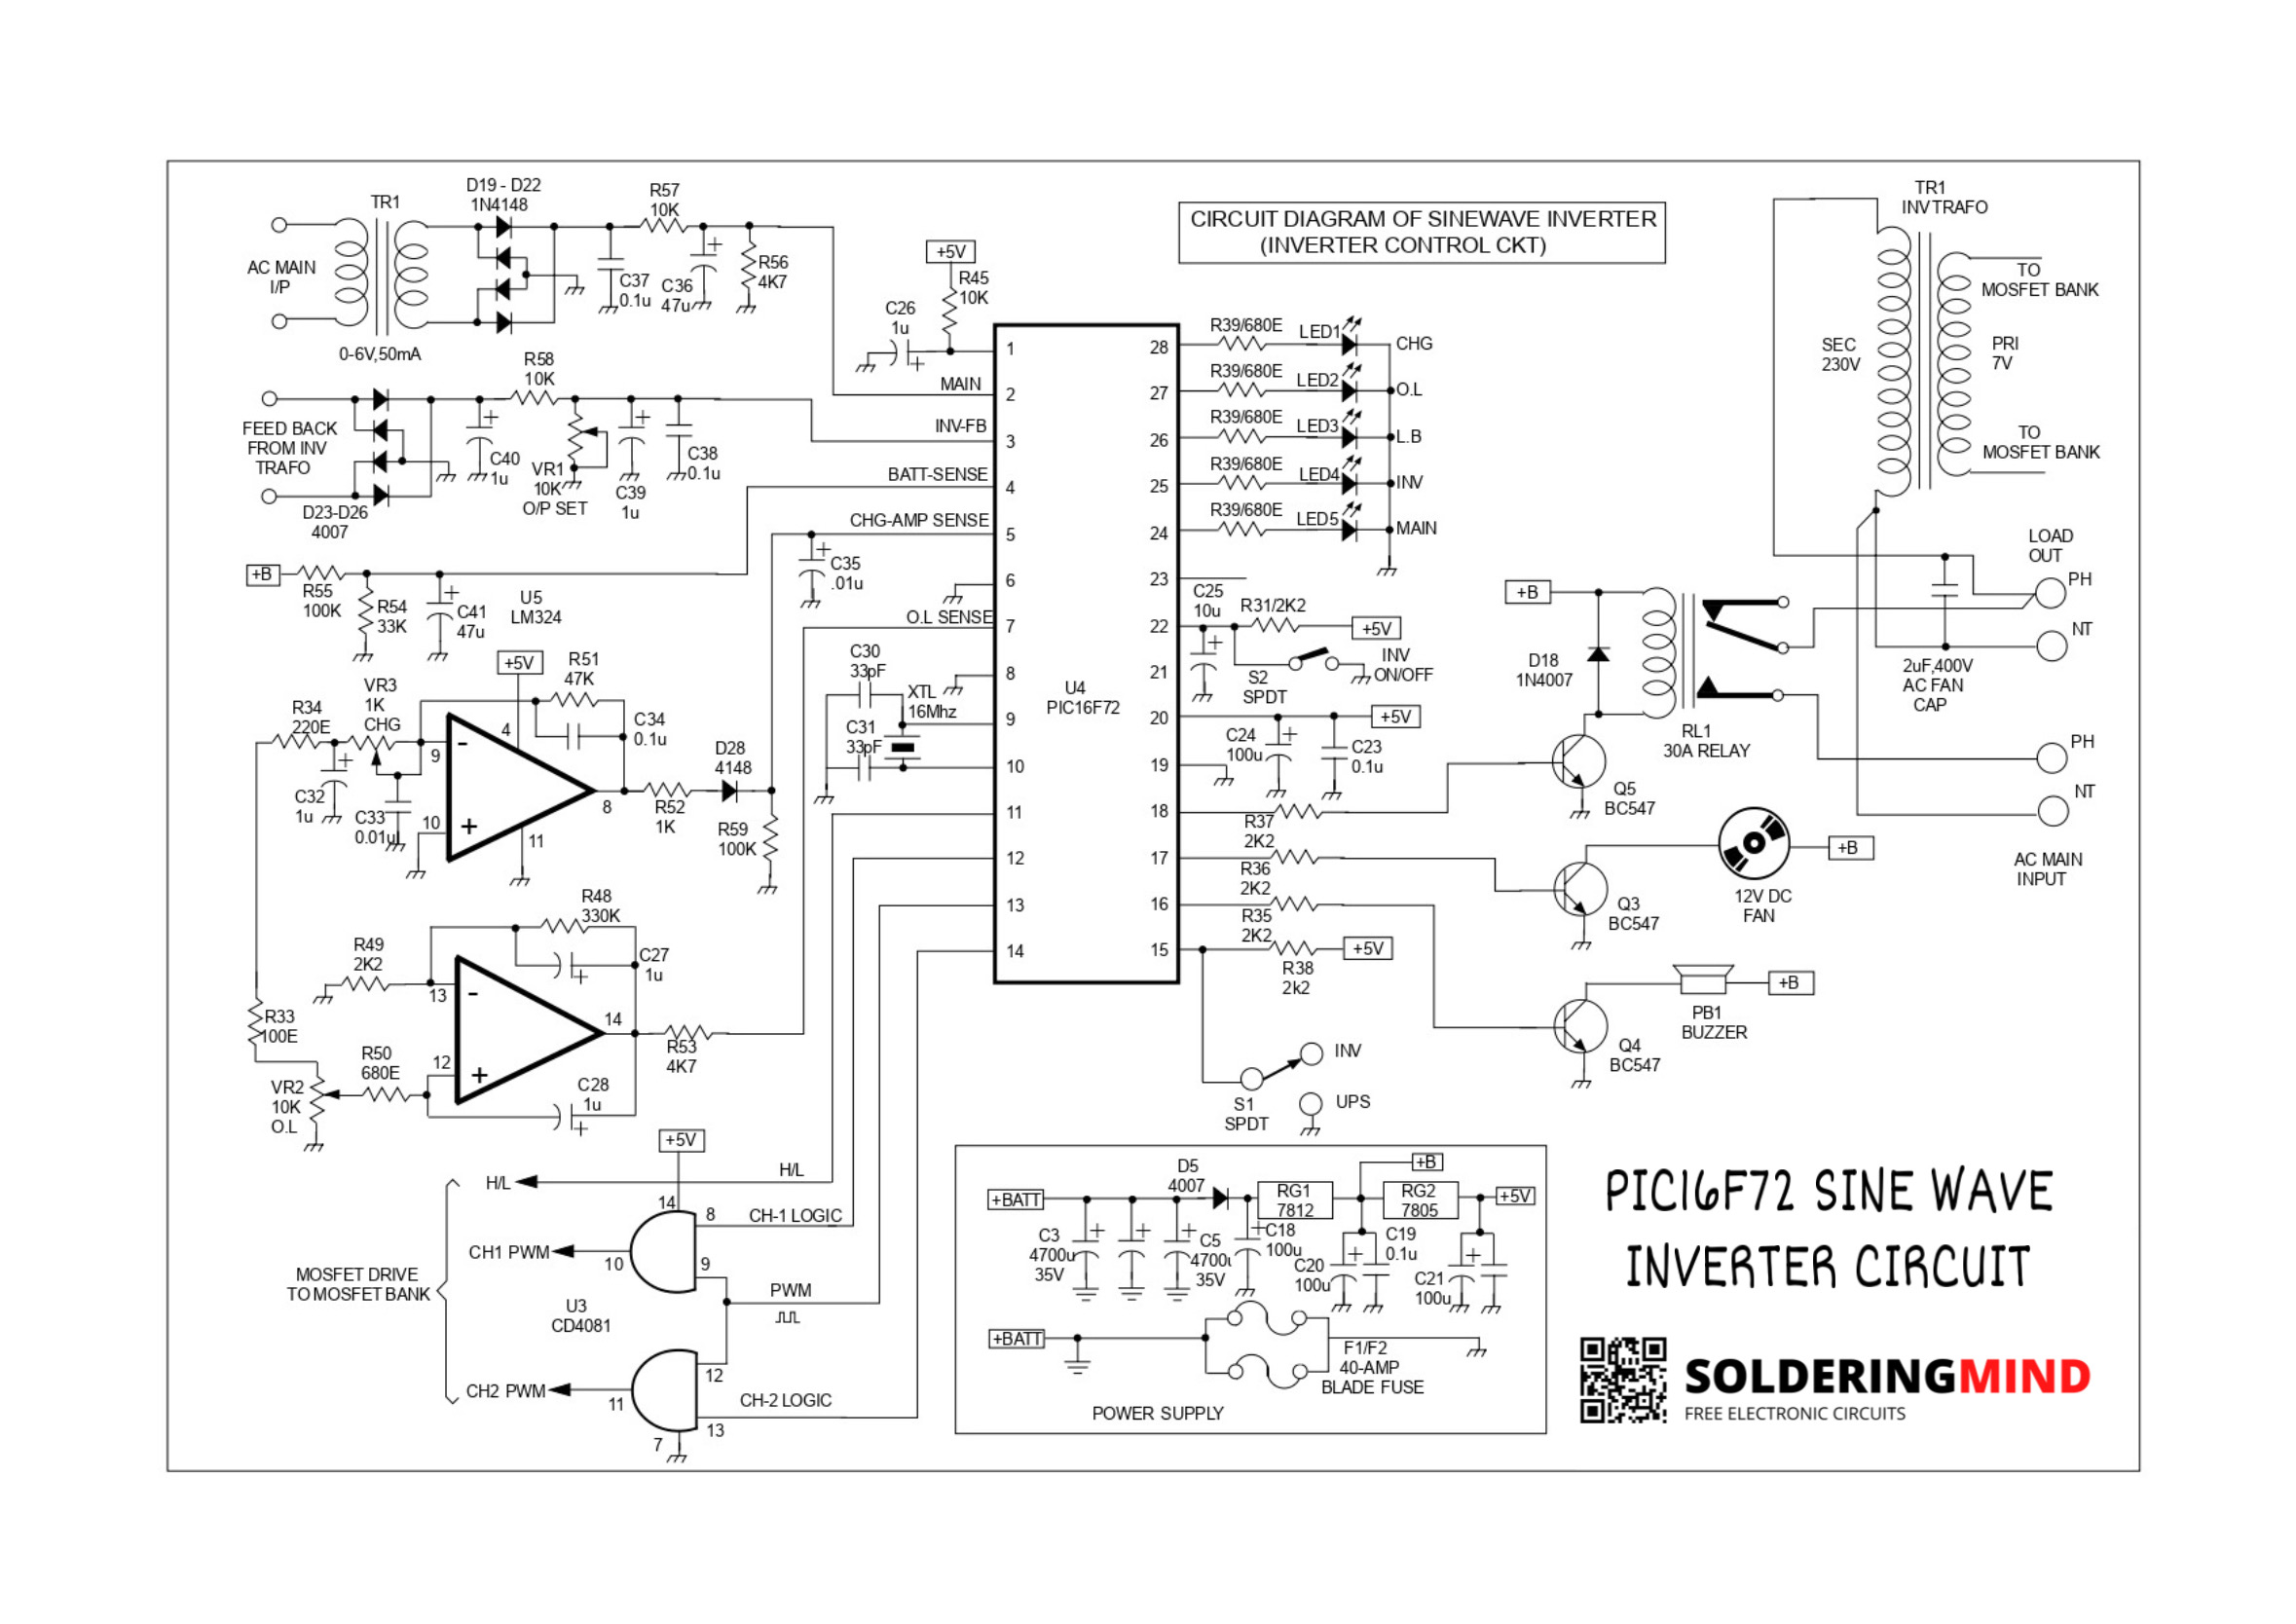 Pic16f72 sine wave inverter circuit